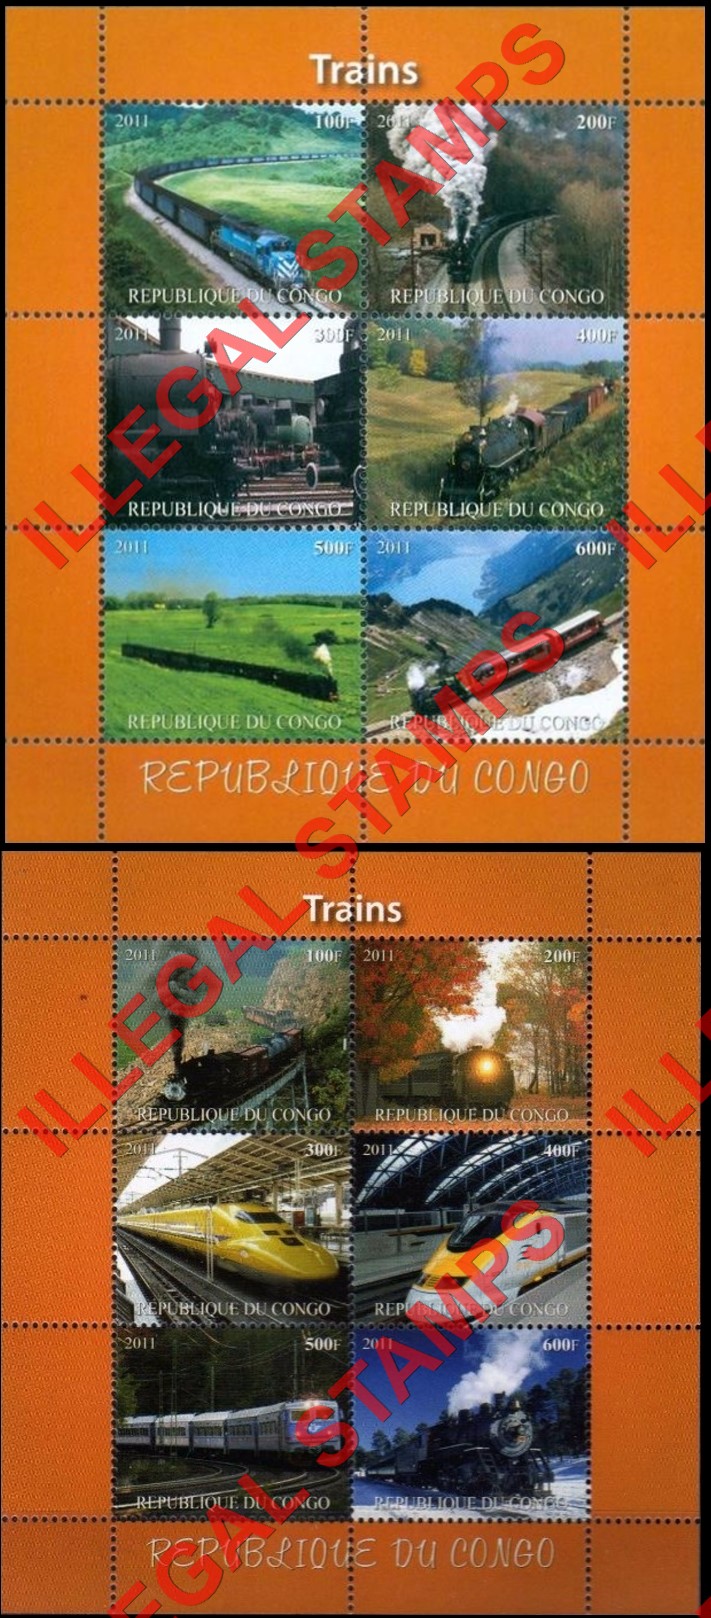 Congo Republic 2011 Trains Illegal Stamp Souvenir Sheets of 6